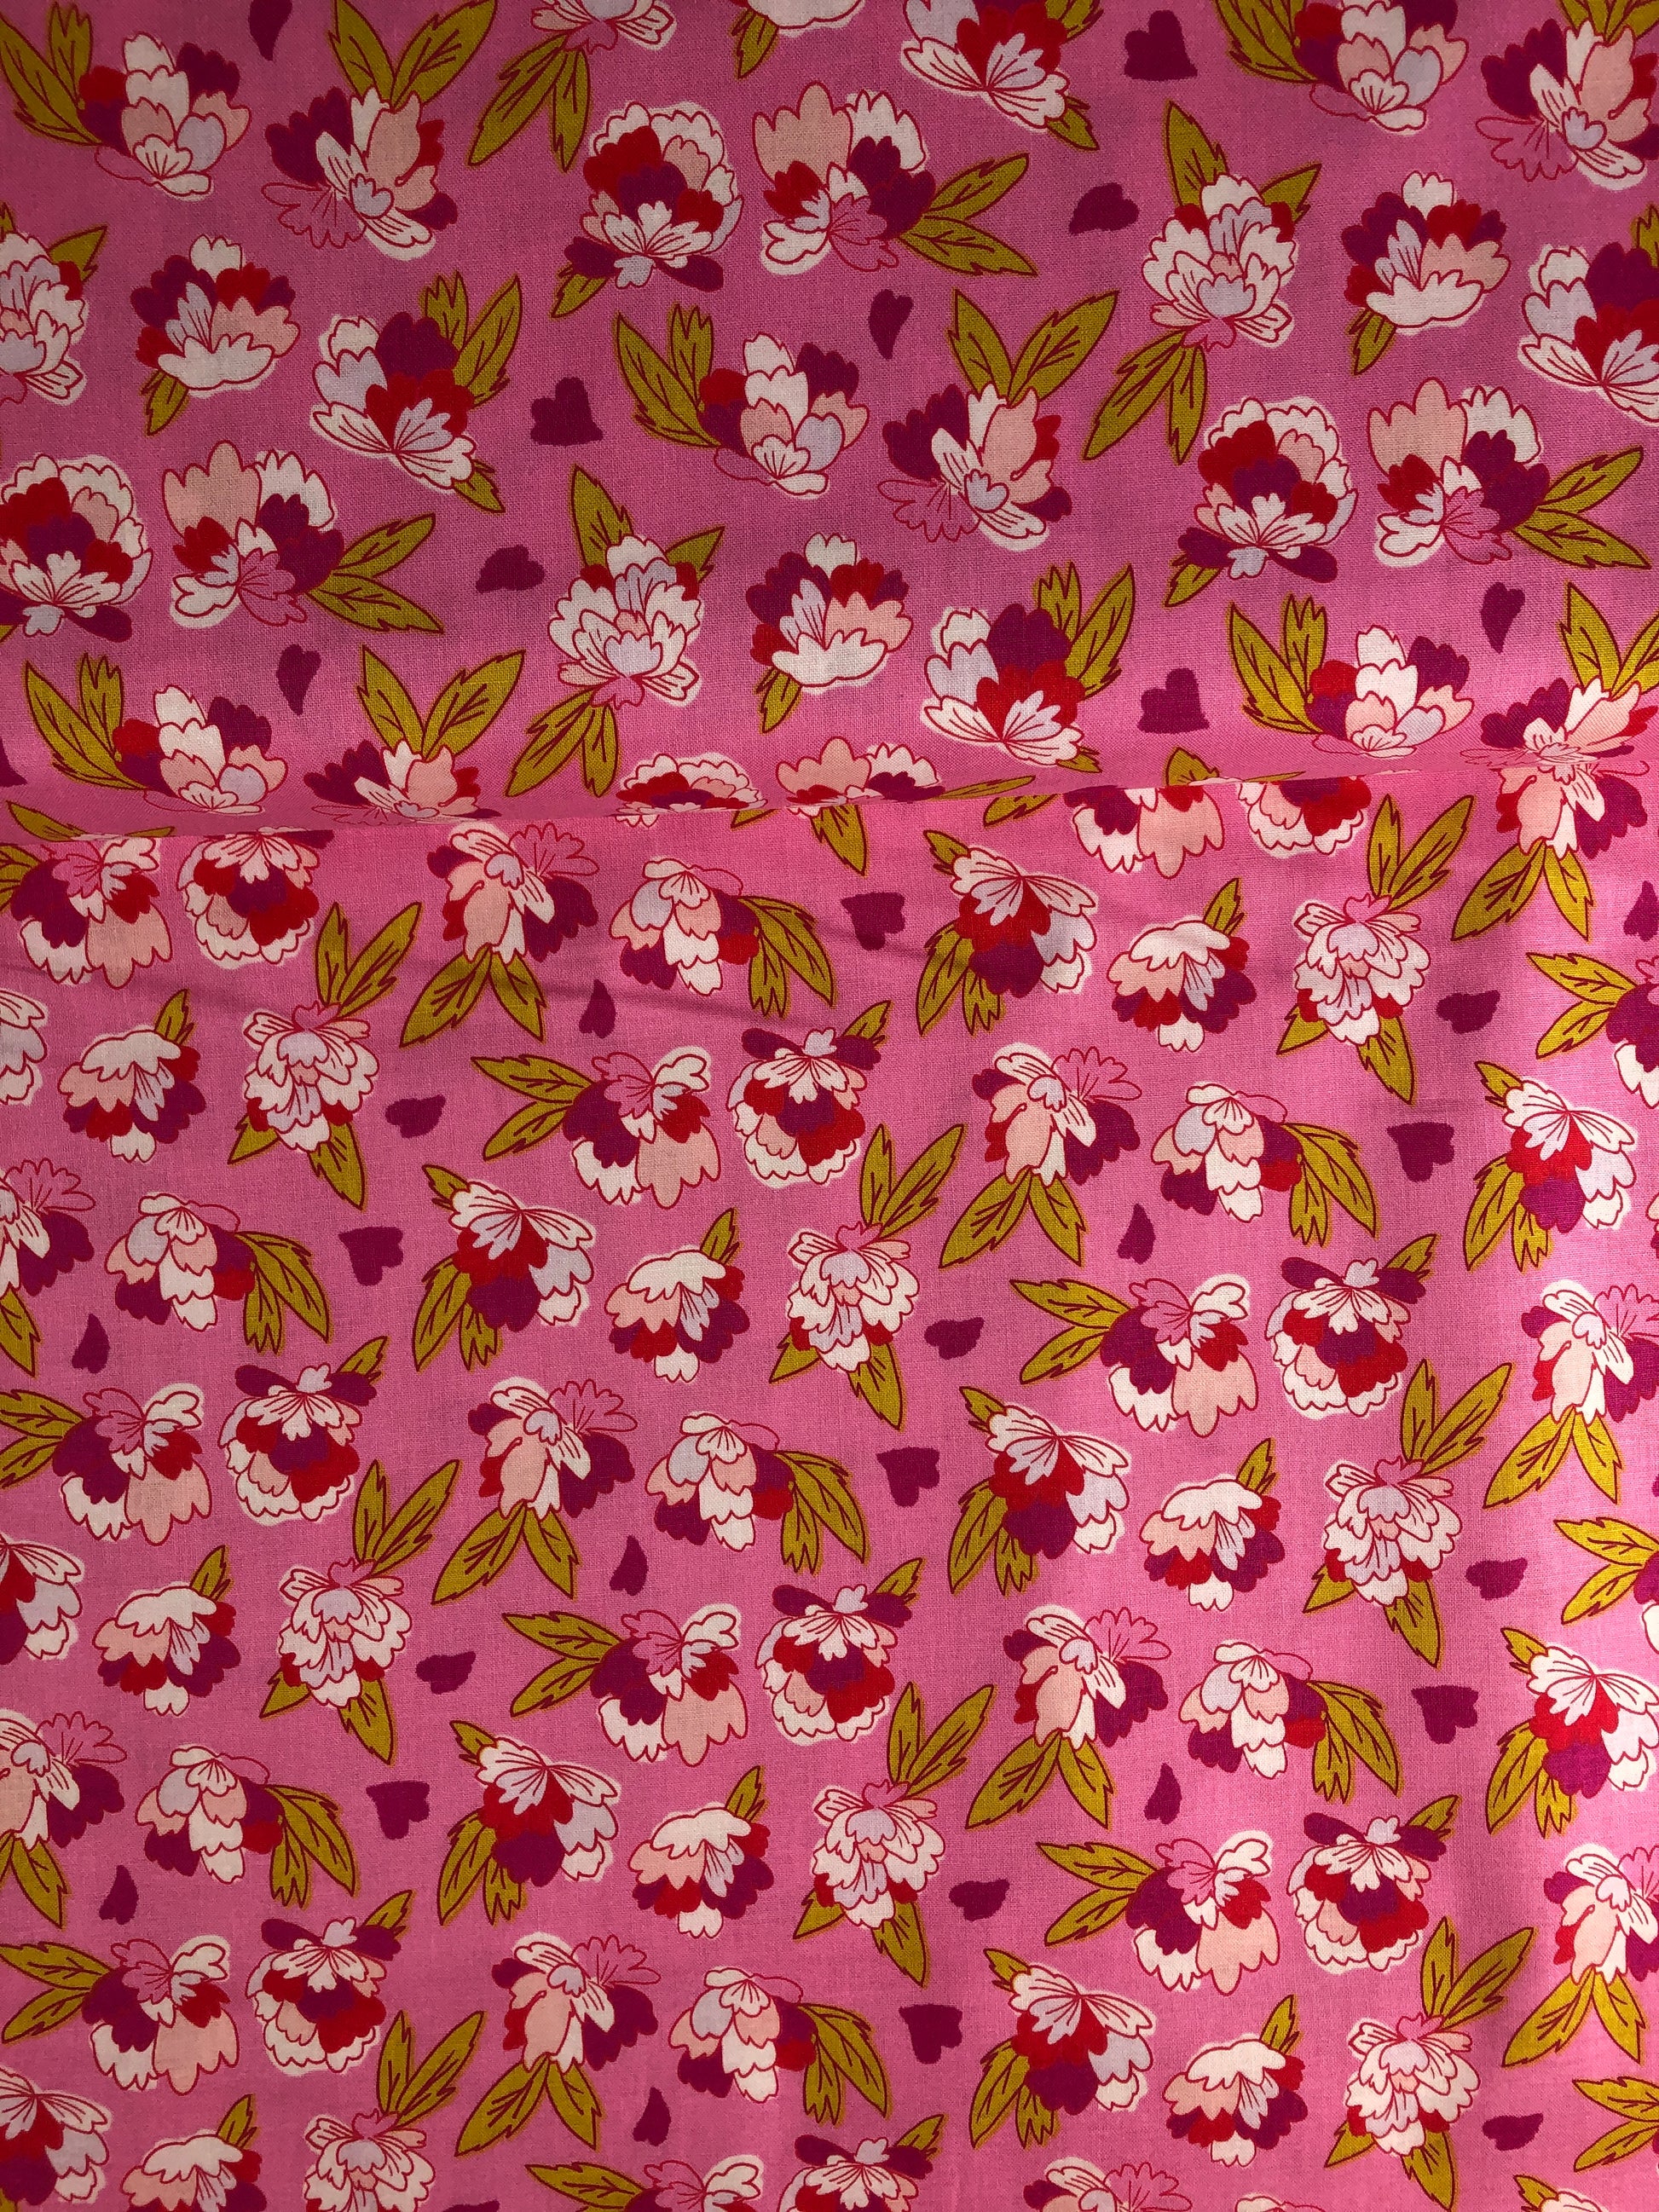 freespirit fabric courtney cerruti anna maria horner conservatory flower market tearose morning Fabric Fetish